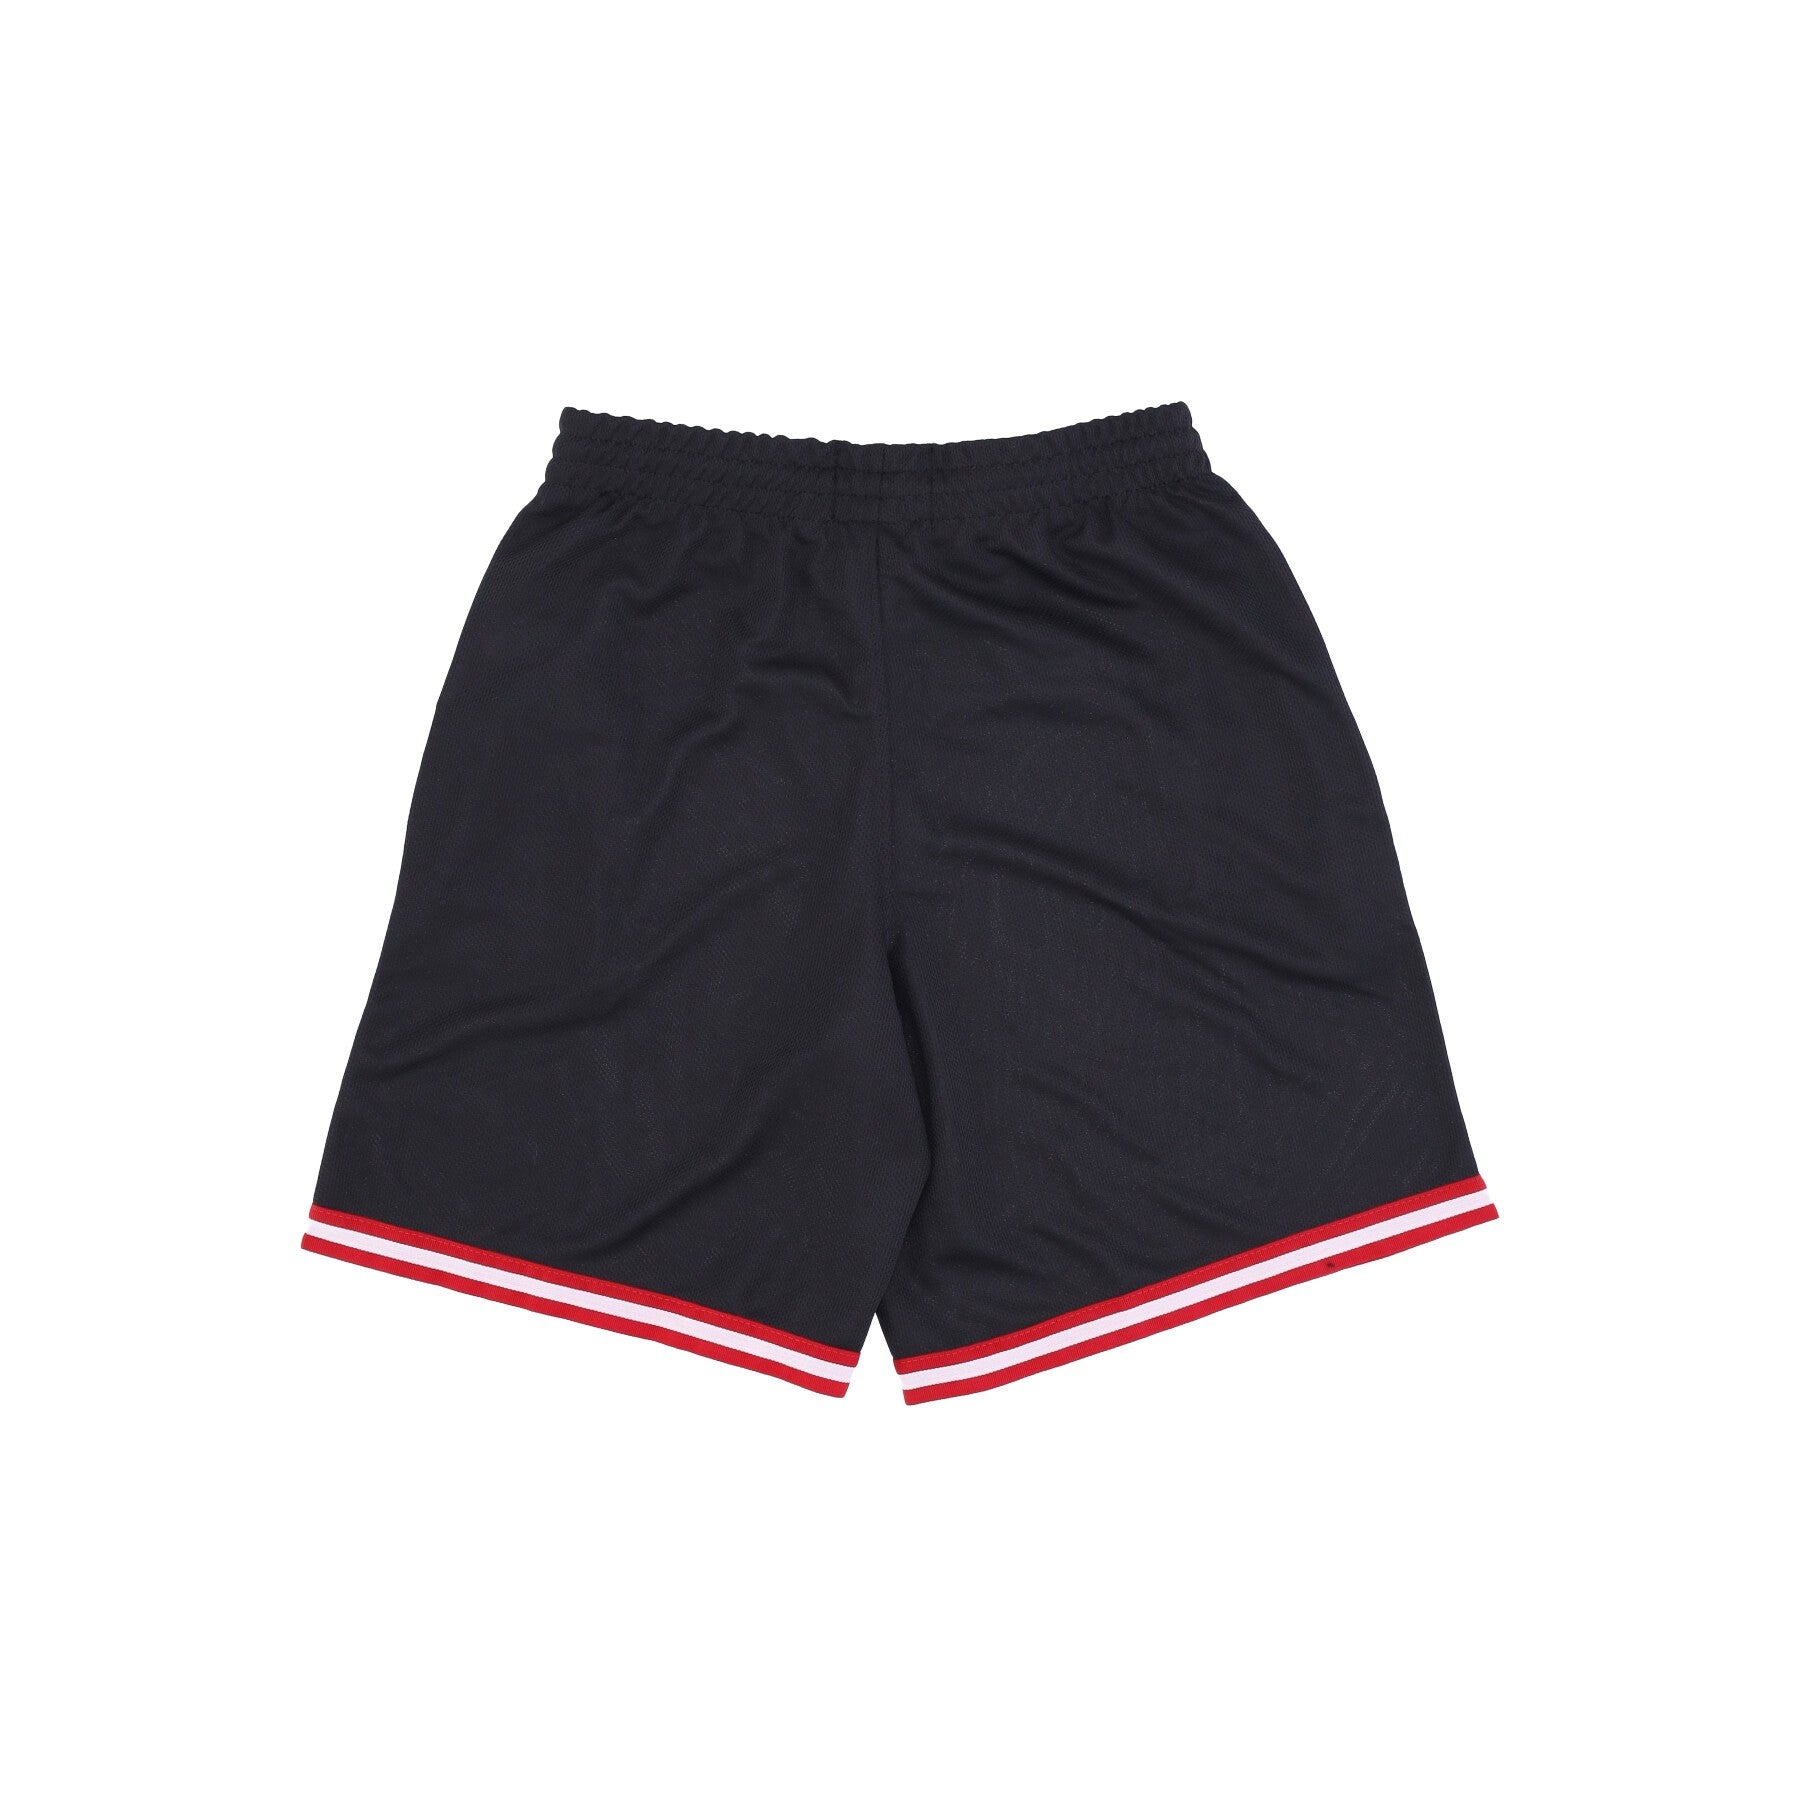 47 Brand, Pantaloncino Tipo Basket Uomo Nhl Back Court Grafton Shorts Chibla, 